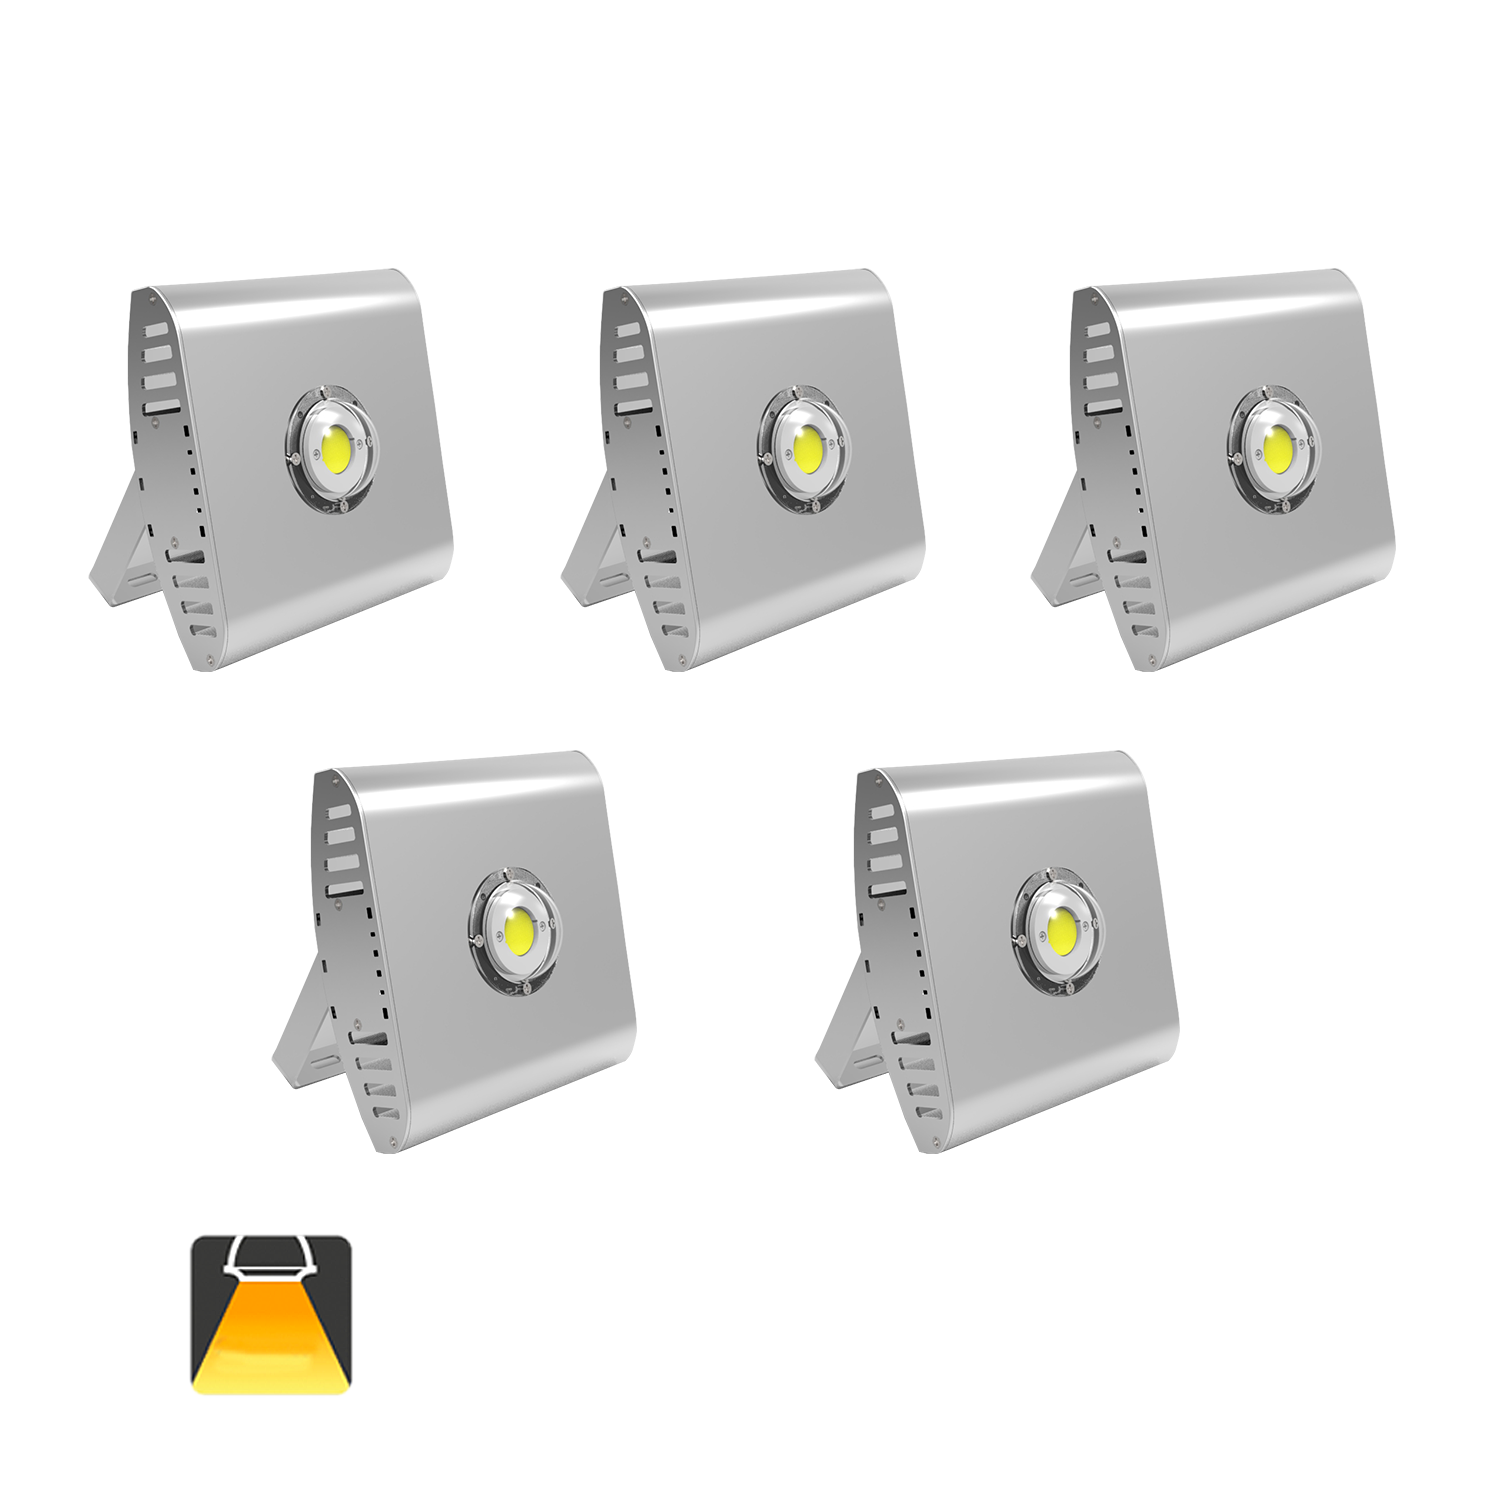 Aigostar - Confezione da 5 Faretto a LED COB, 50W, 4500LM, Impermeabile IP65, Luce Naturale 4000K[Classe di efficienza energetica A+]